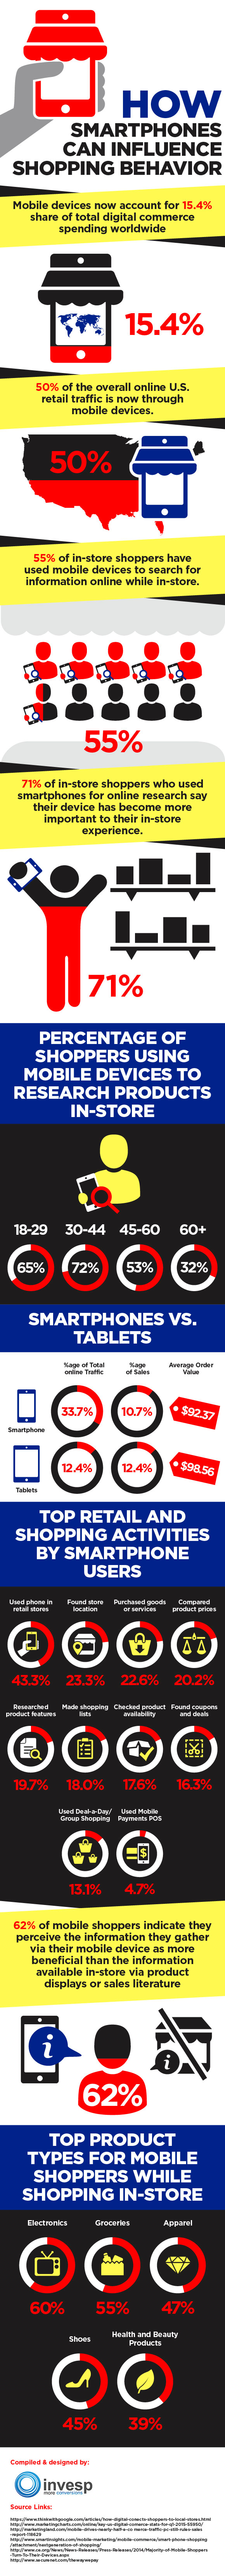 How smartphones Influence Shopping Behavior